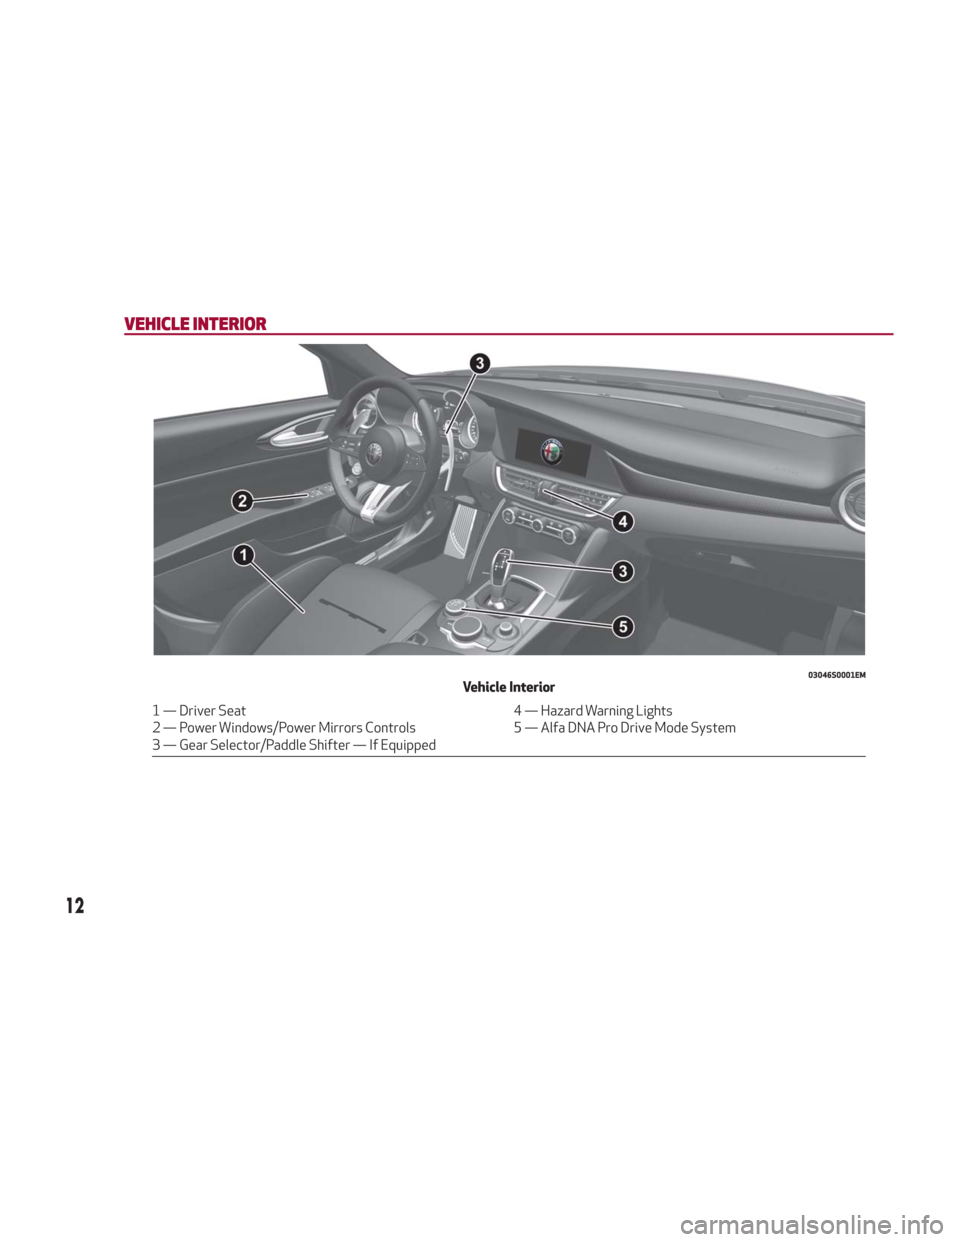 Alfa Romeo Giulia 2018 User Guide VEHICLE INTERIOR
03046S0001EMVehicle Interior
1 — Driver Seat4 — Hazard Warning Lights
2 — Power Windows/Power Mirrors Controls 5 — Alfa DNA Pro Drive Mode System
3 — Gear Selector/Paddle Sh